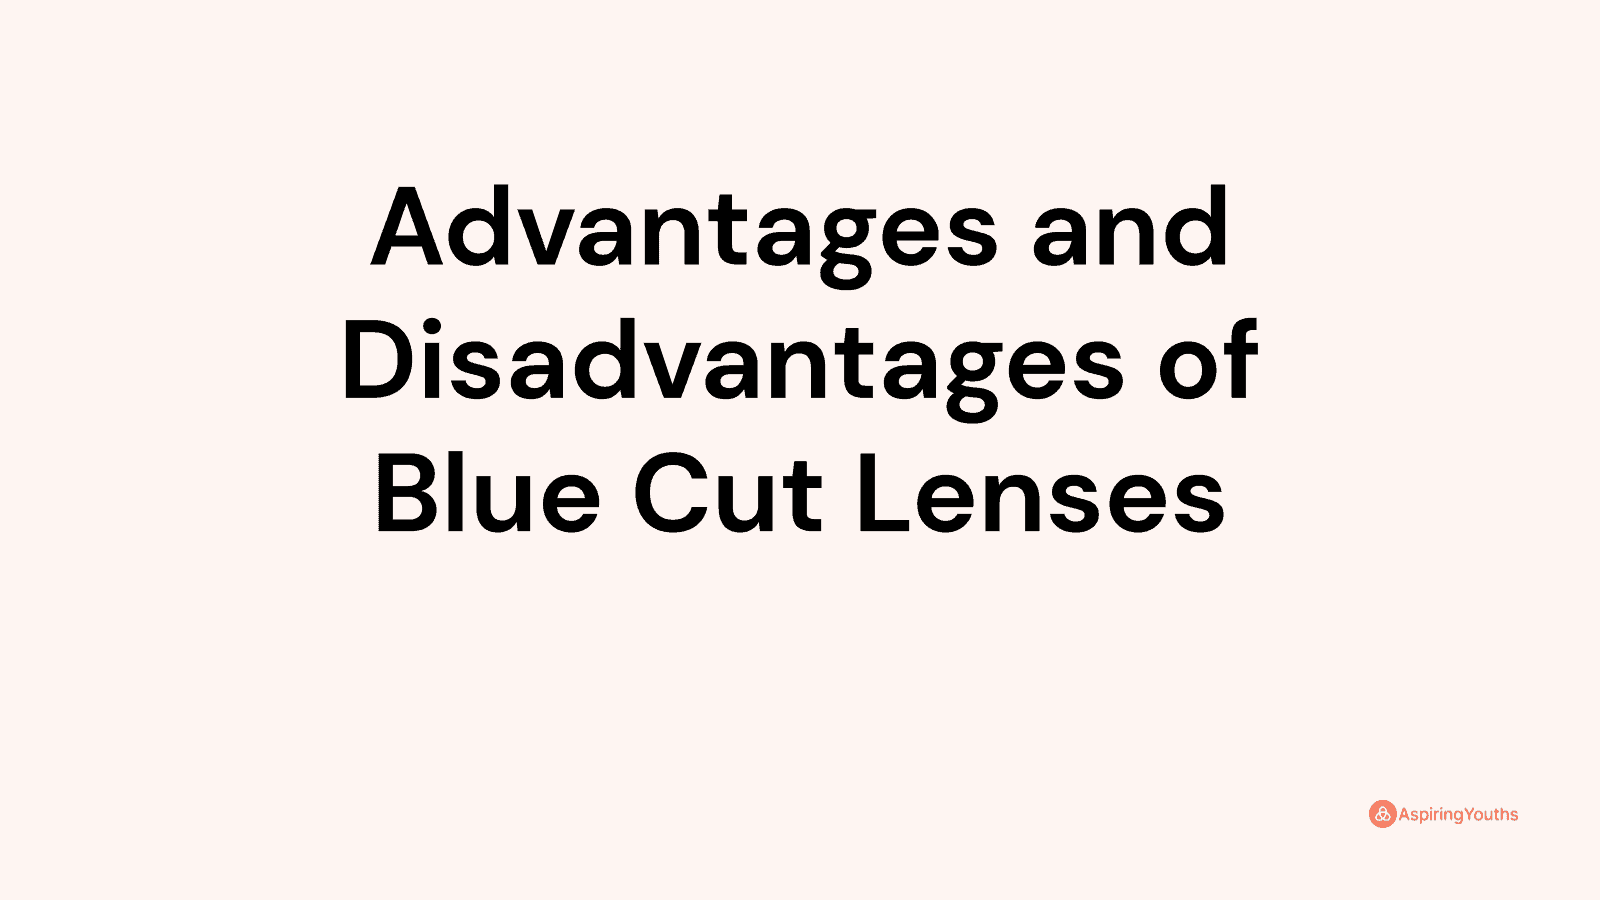 Advantages and disadvantages of Blue Cut Lenses